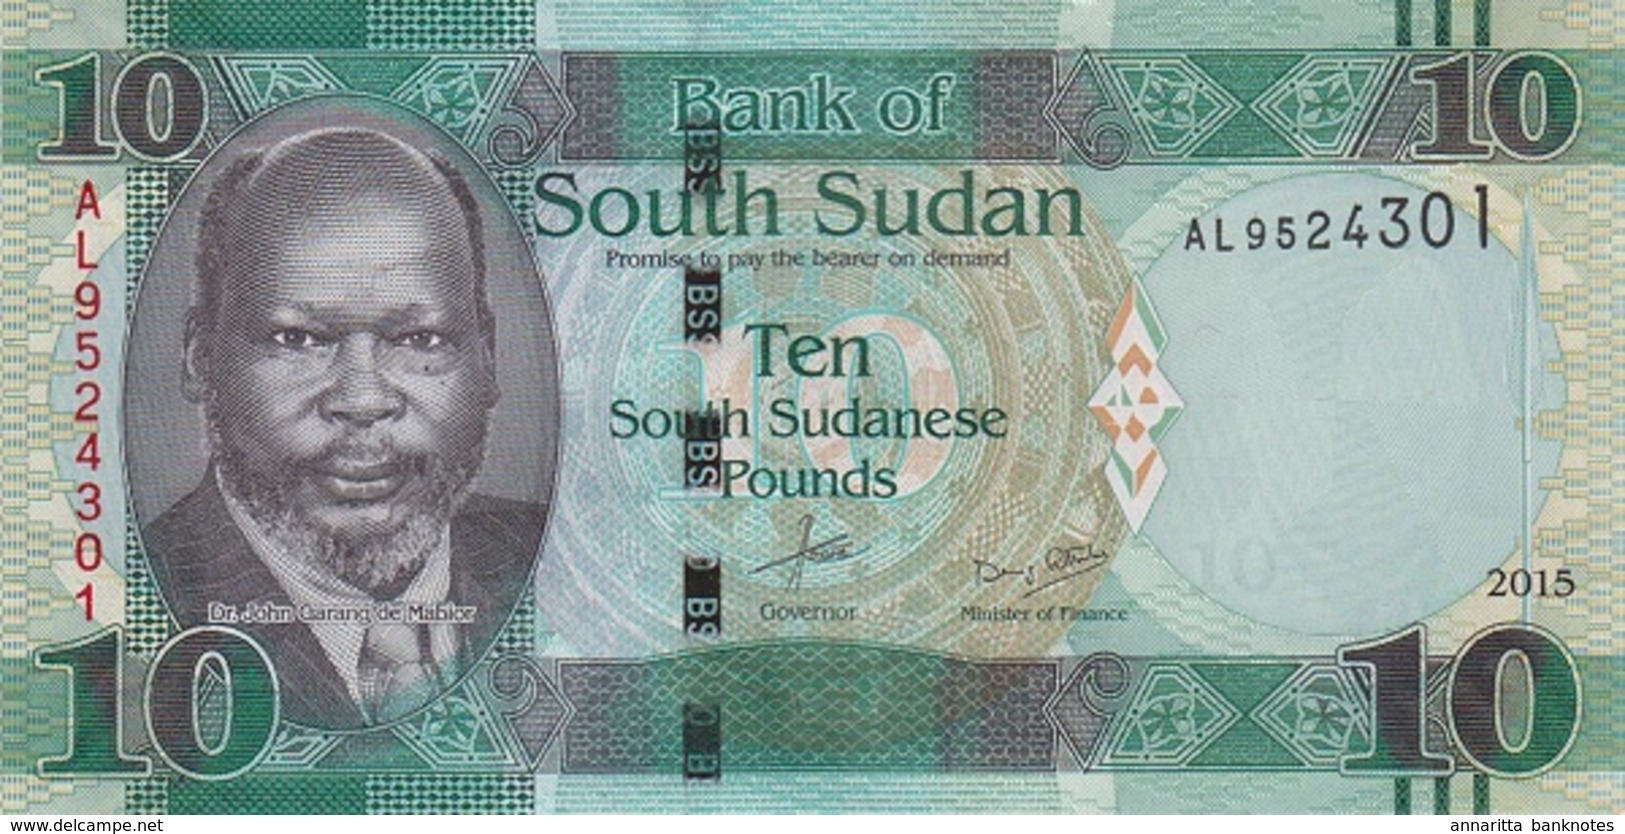 SOUDAN DU SUD 10 POUNDS 2015 P-7b NEUF VERT [SS110a] - South Sudan